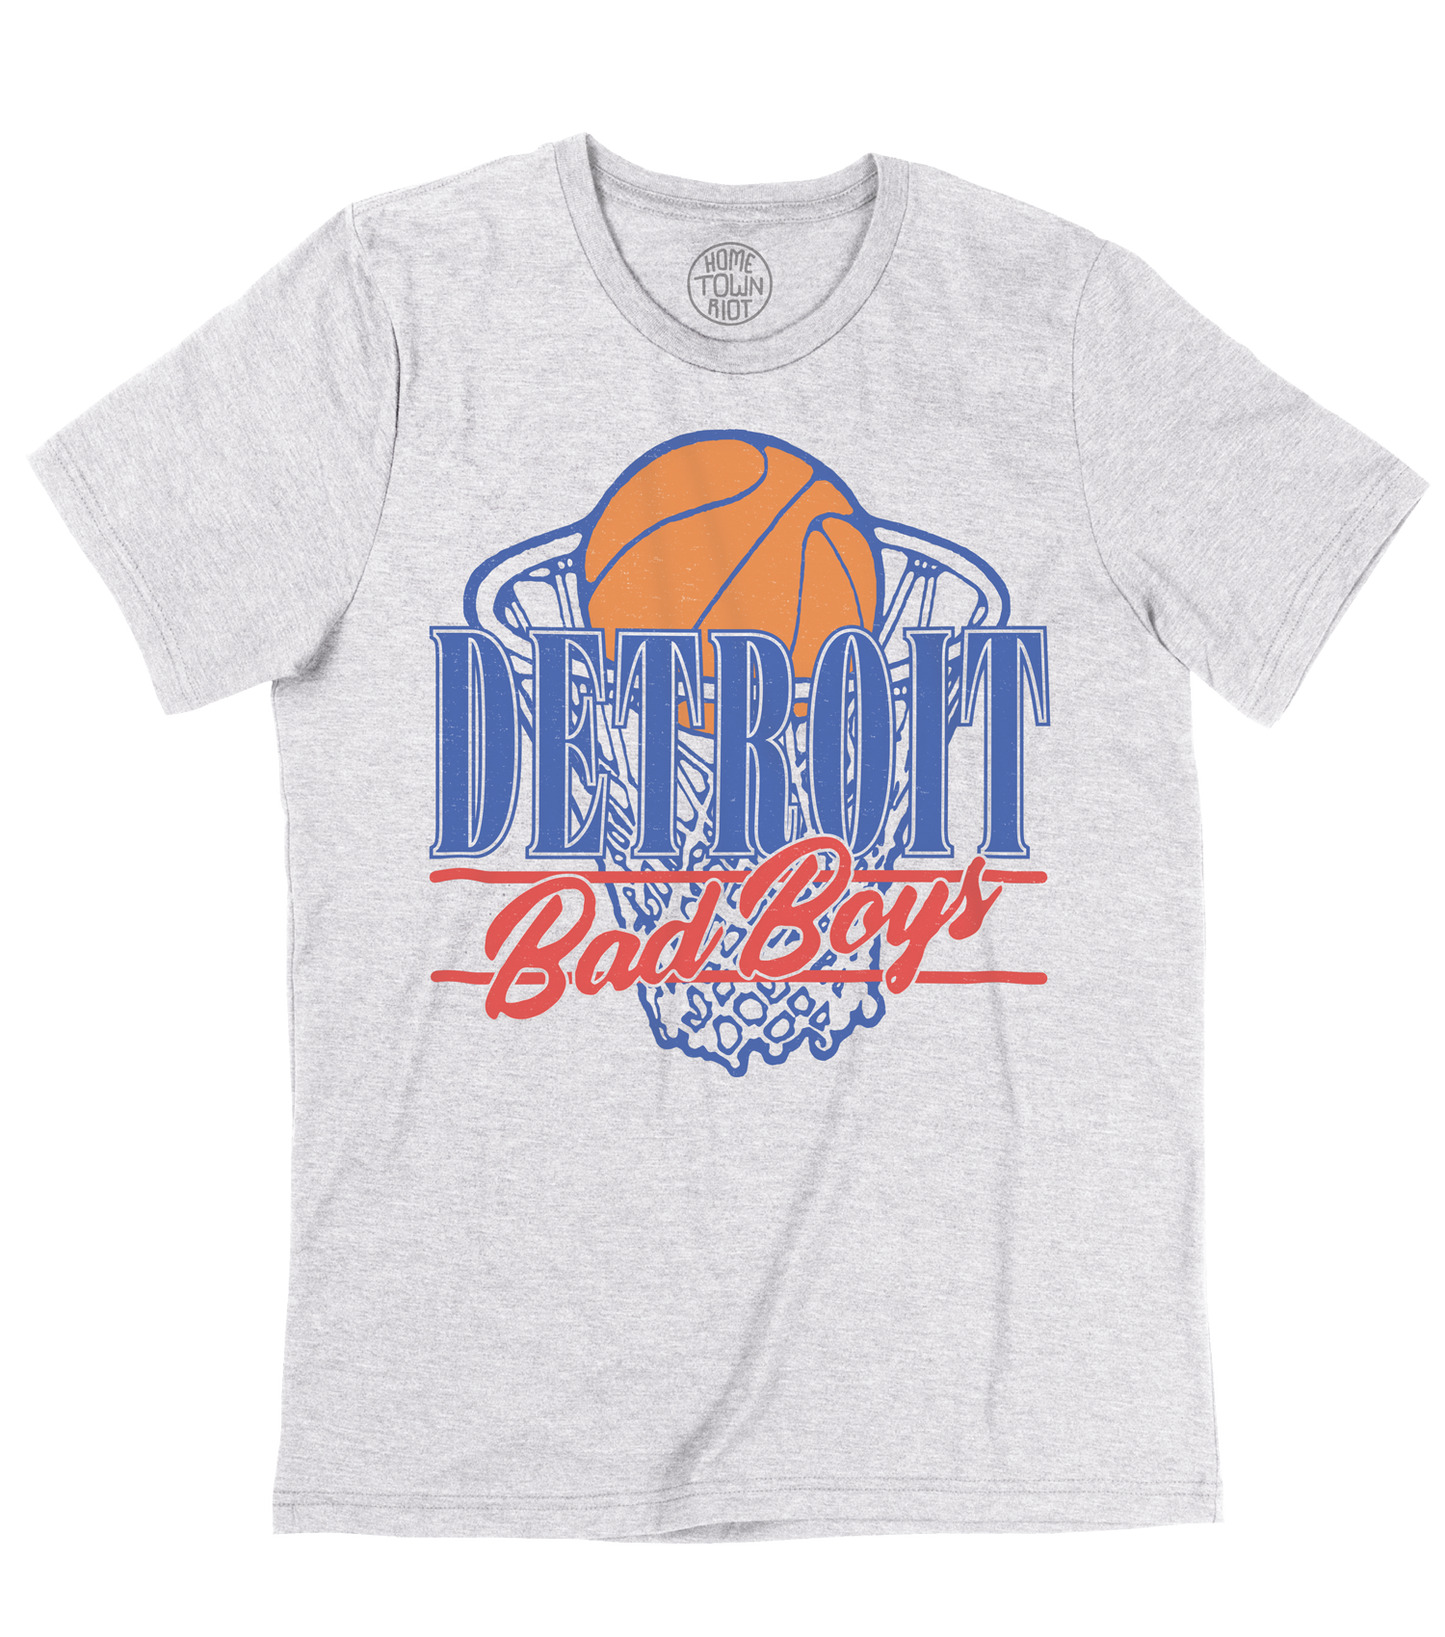 Detroit Basketball Bad Boys Shirt